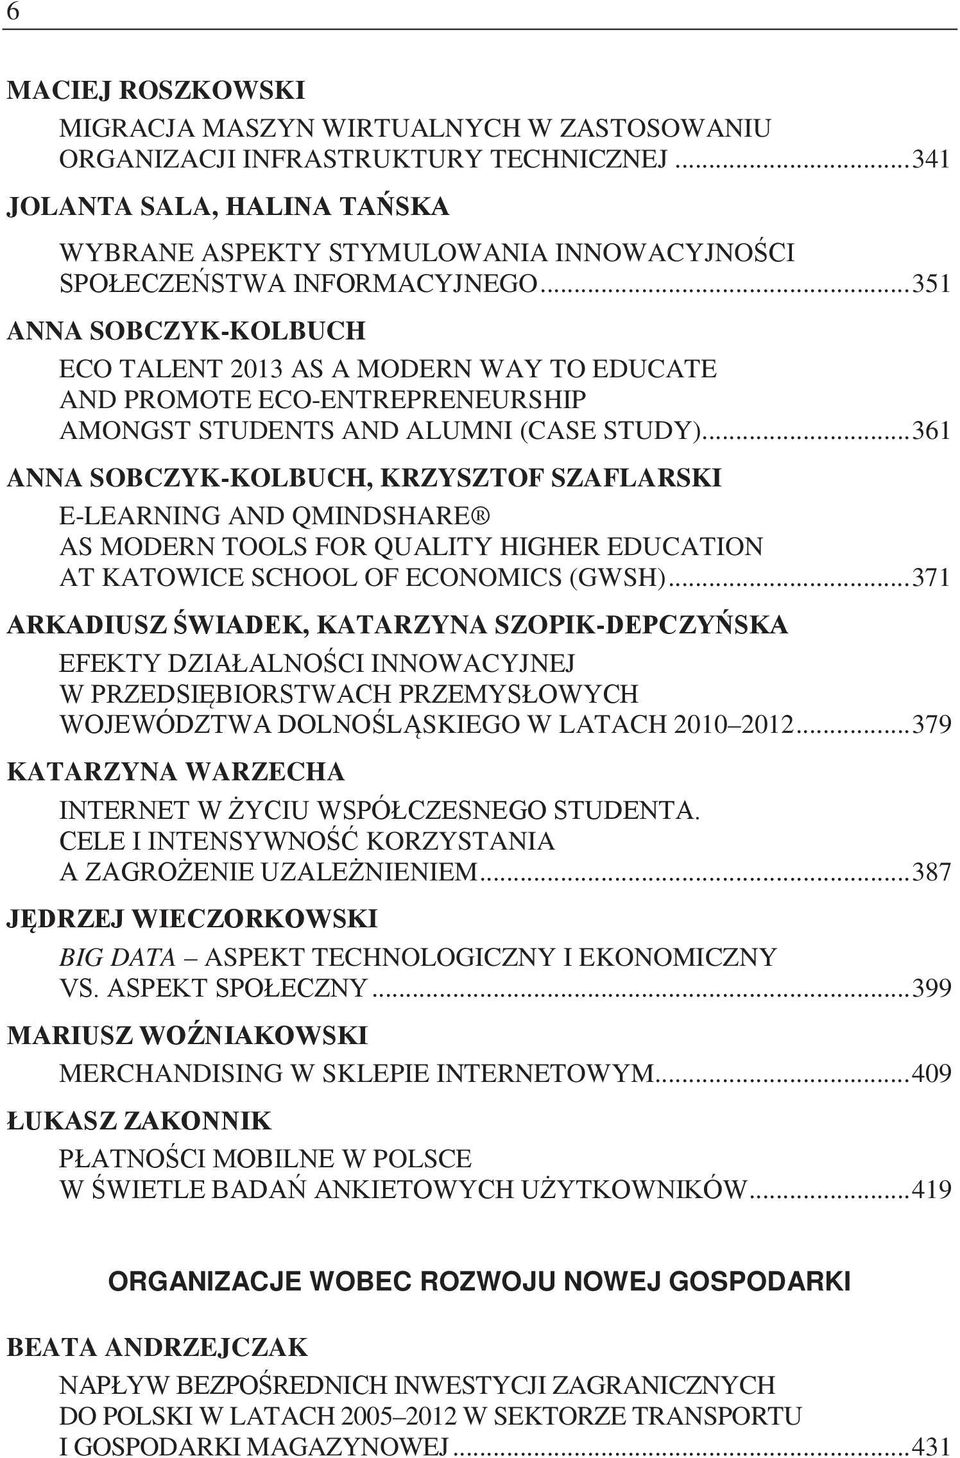 ..361 ANNA SOBCZYK-KOLBUCH, KRZYSZTOF SZAFLARSKI E-LEARNING AND QMINDSHARE AS MODERN TOOLS FOR QUALITY HIGHER EDUCATION AT KATOWICE SCHOOL OF ECONOMICS (GWSH).